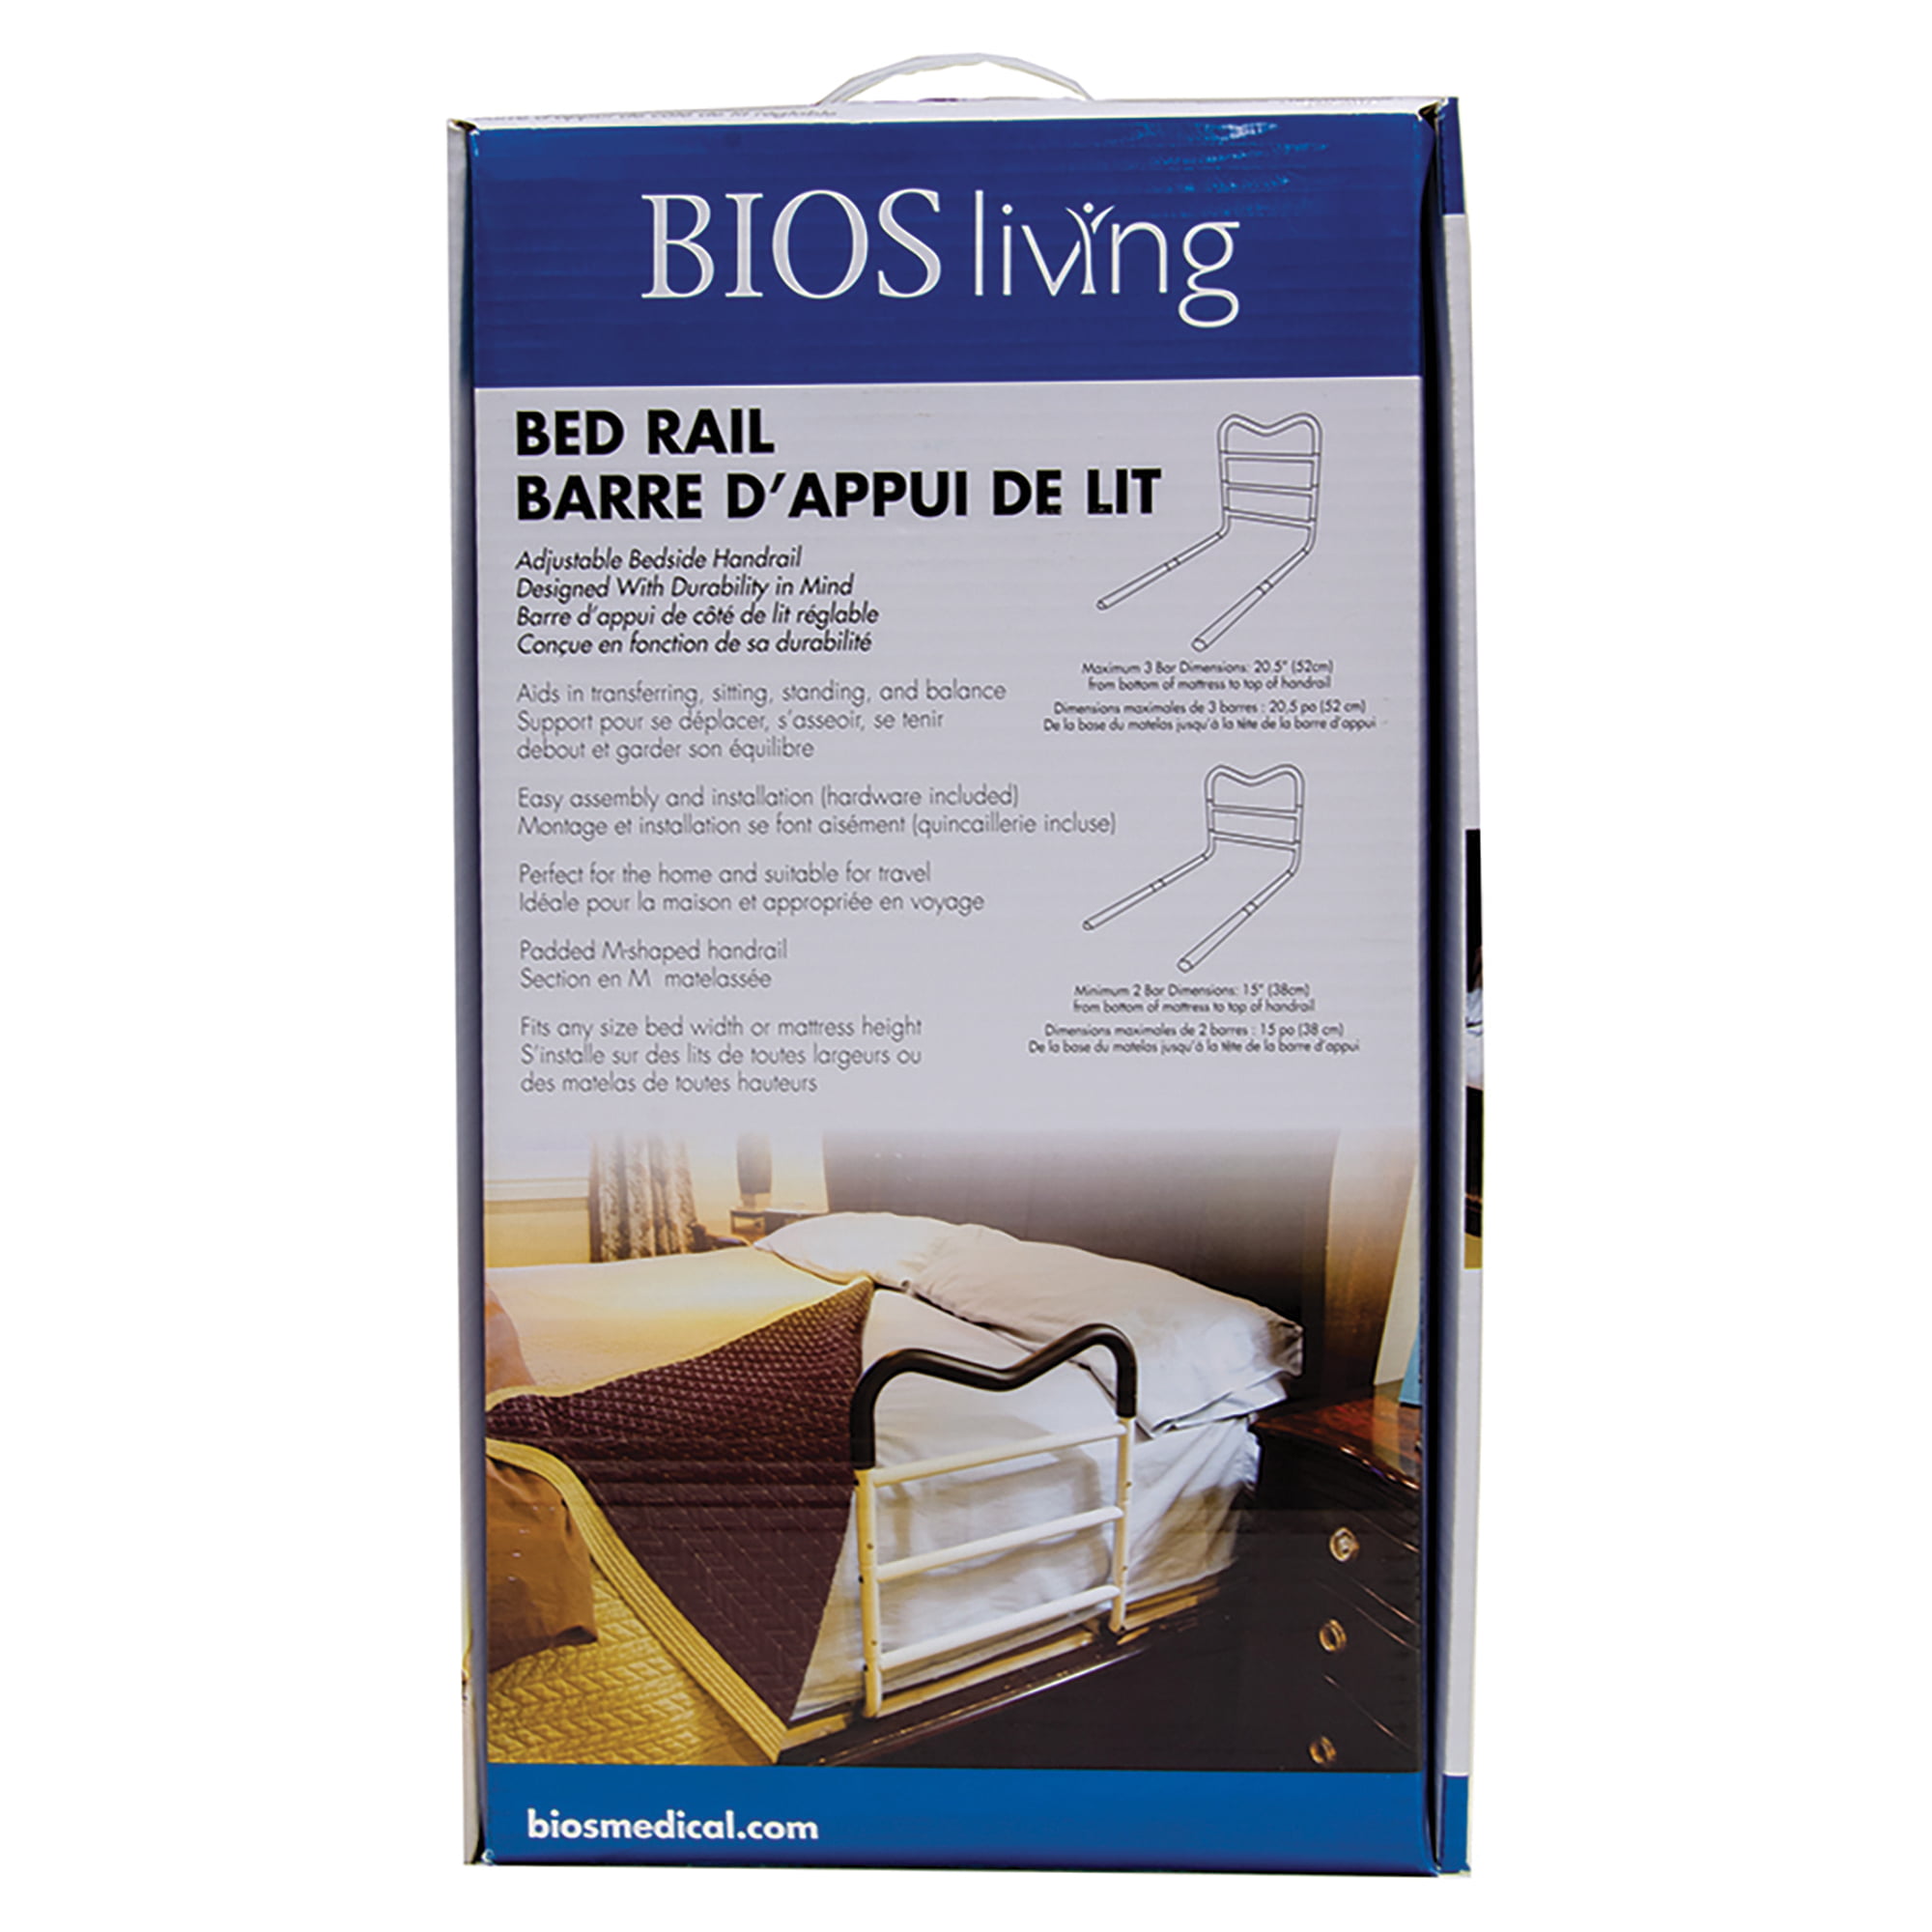 BIOS Living LF838 Adjustable Bedside Handrail